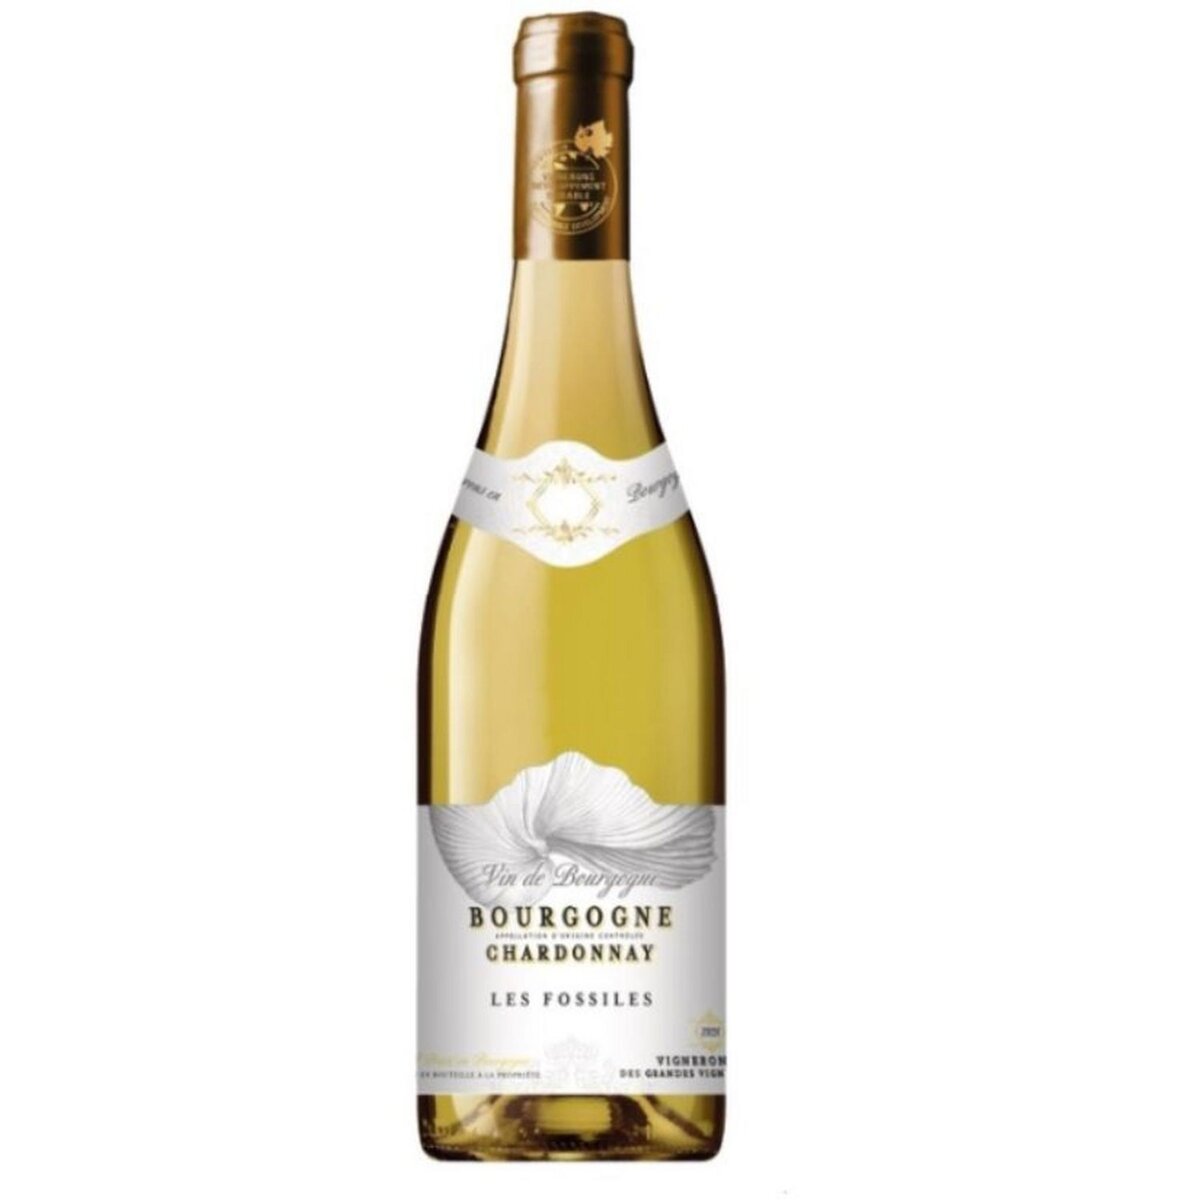 Bourgogne Chardonnay Les Fossiles 2018 75cl